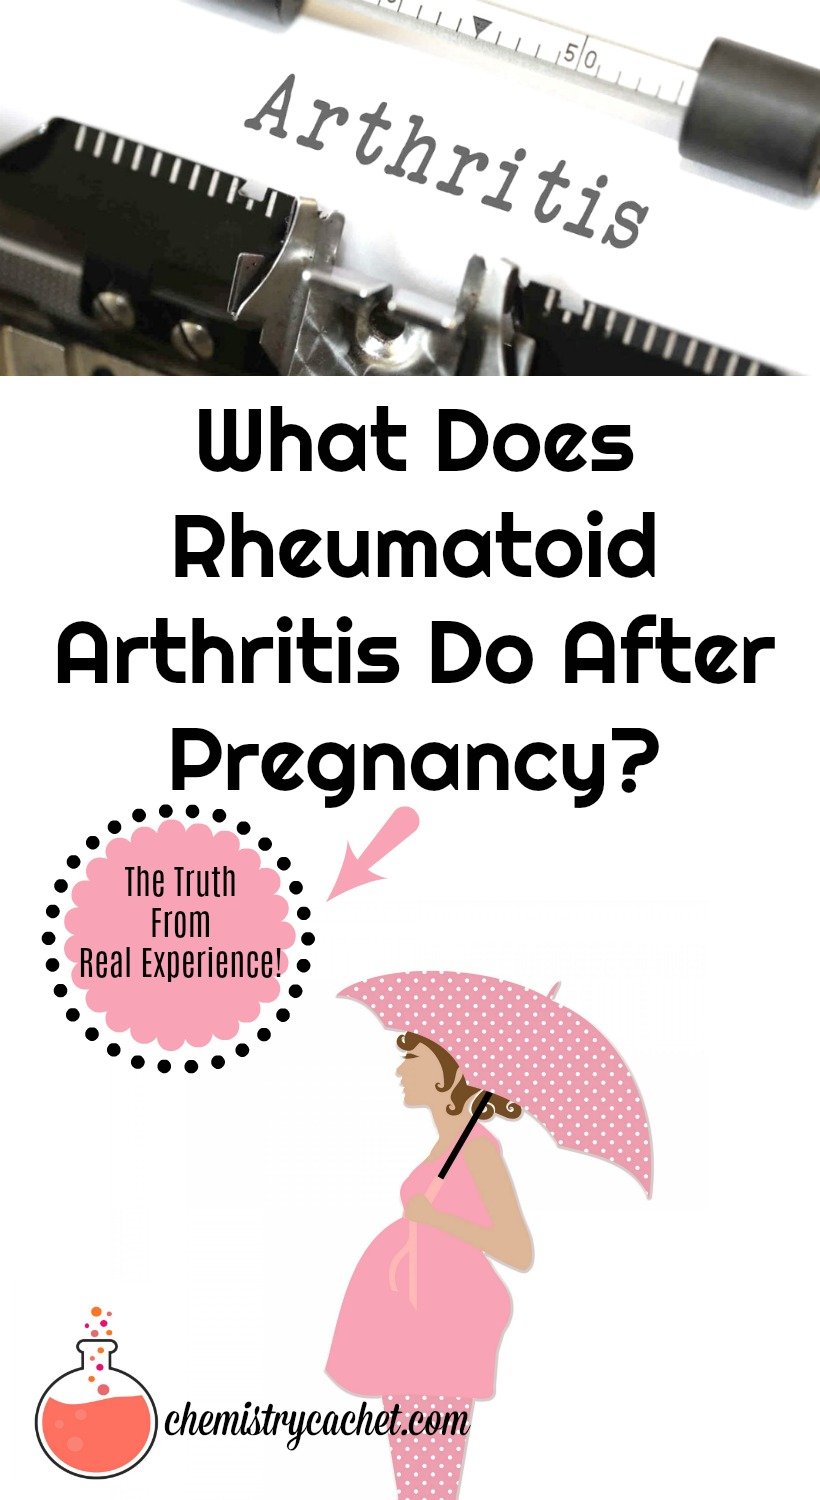 What Does Rheumatoid Arthritis Do After Pregnancy?